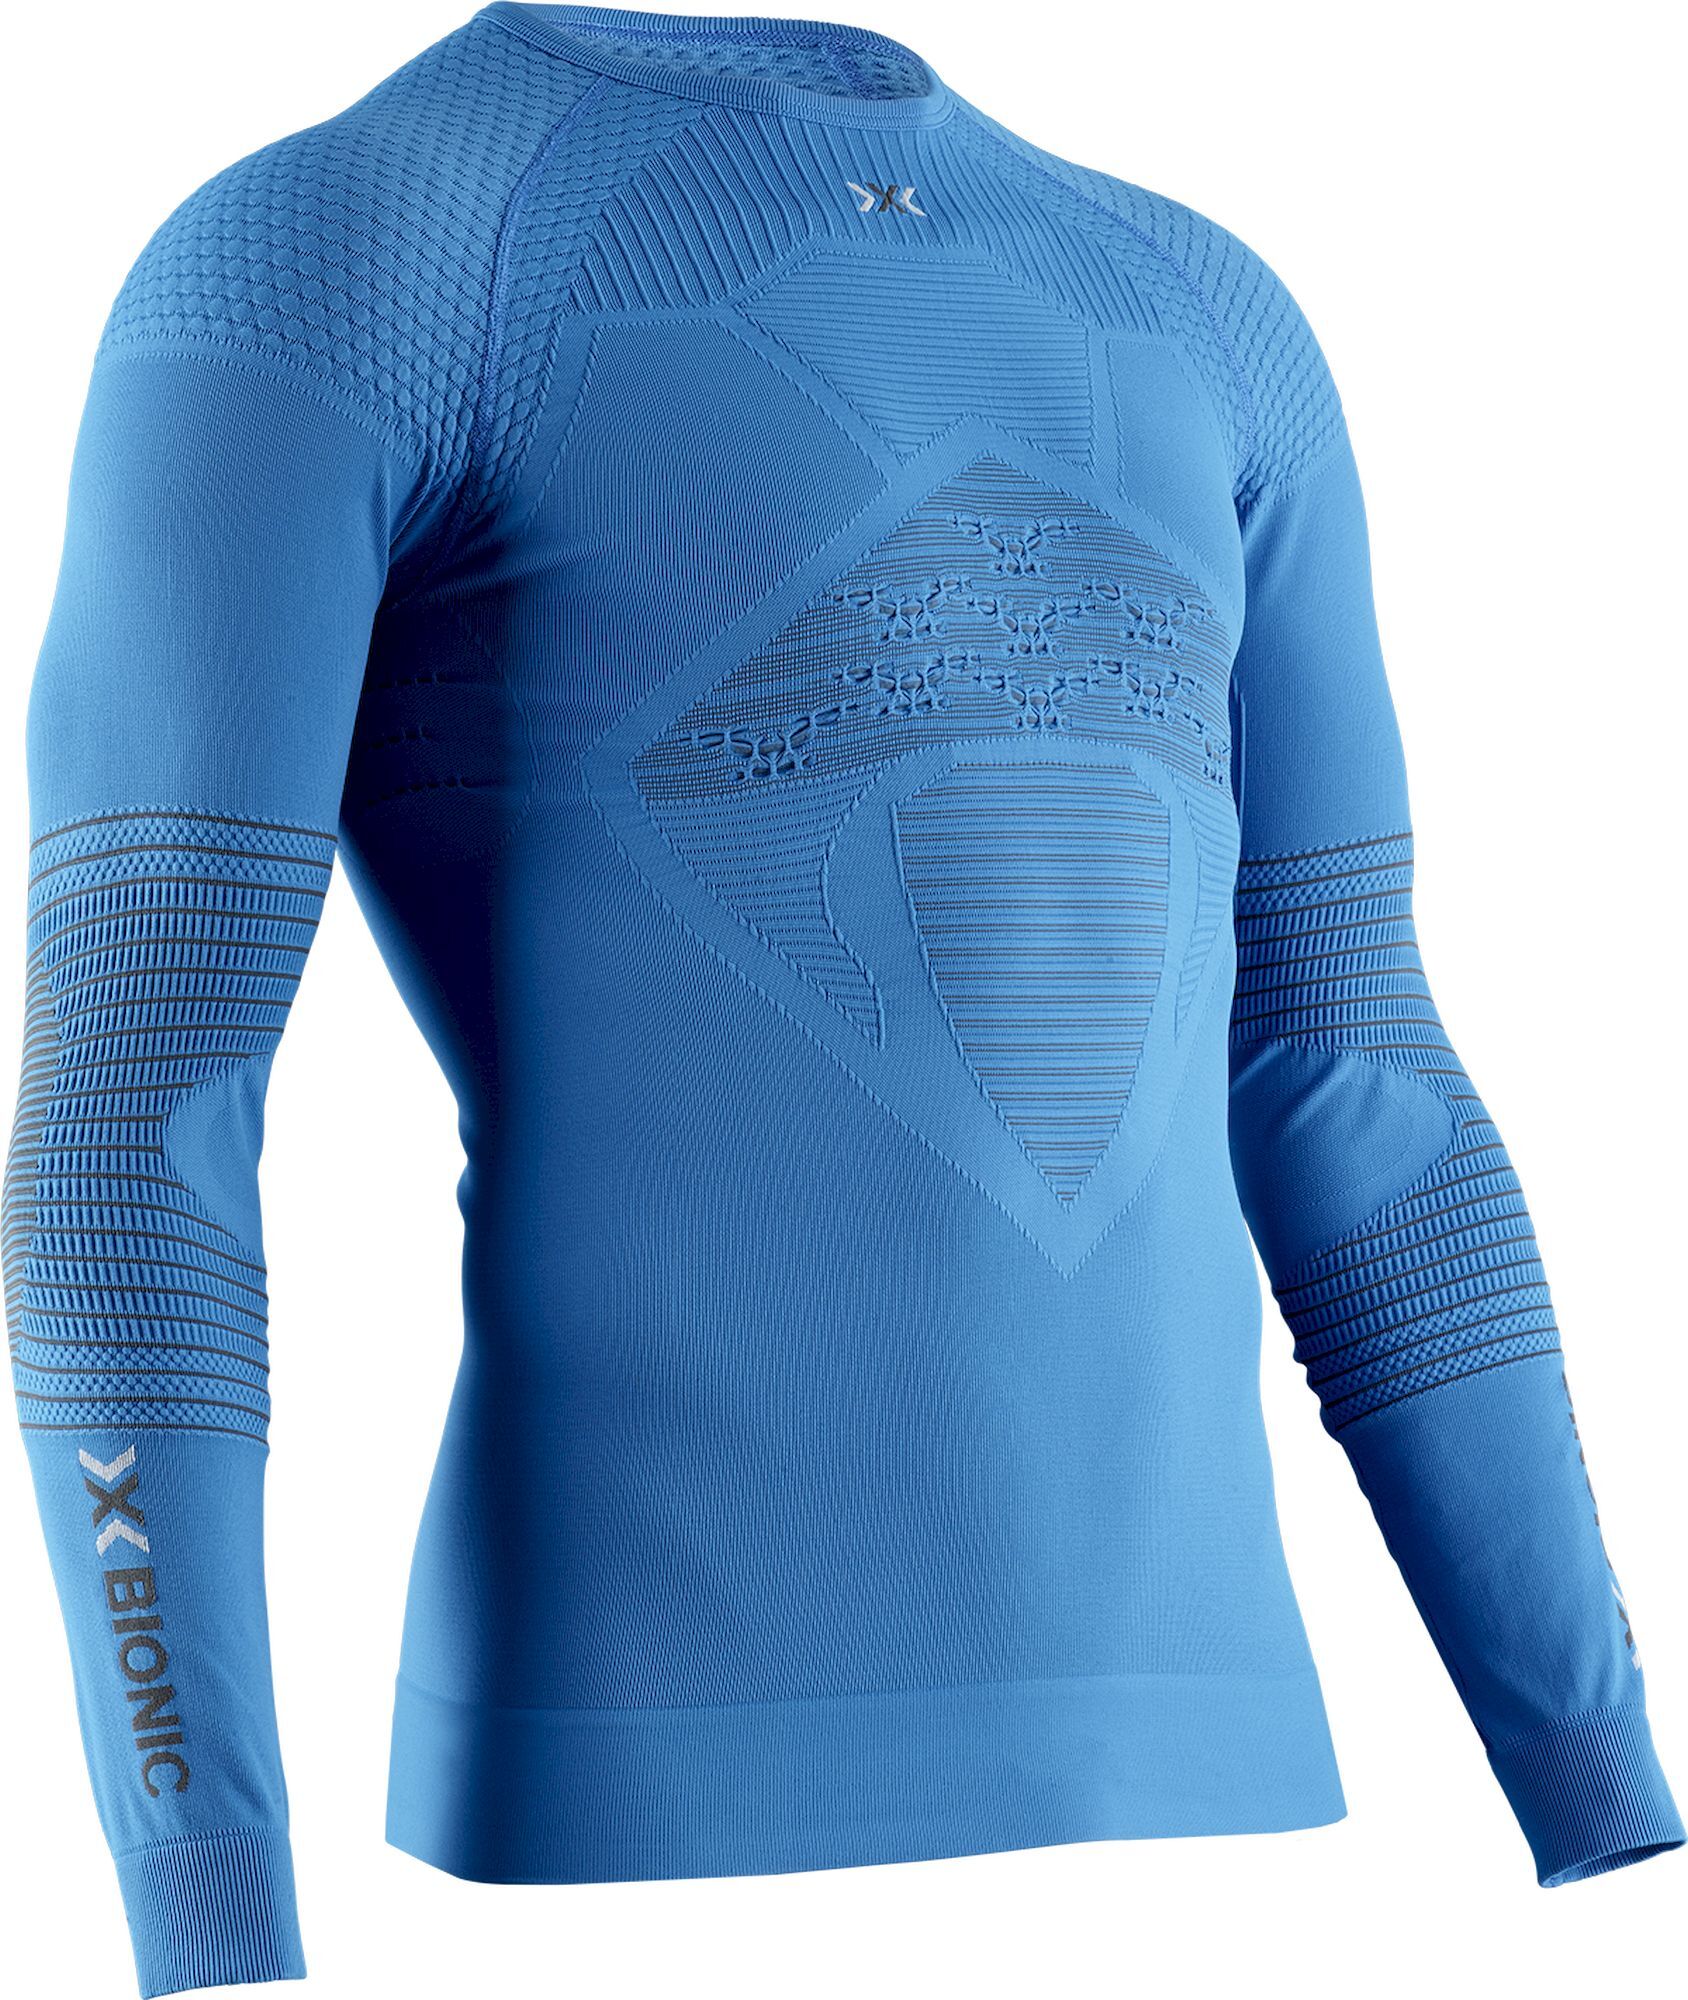 X-Bionic Energizer 4.0 Shirt Long Sleeve - Maillot homme